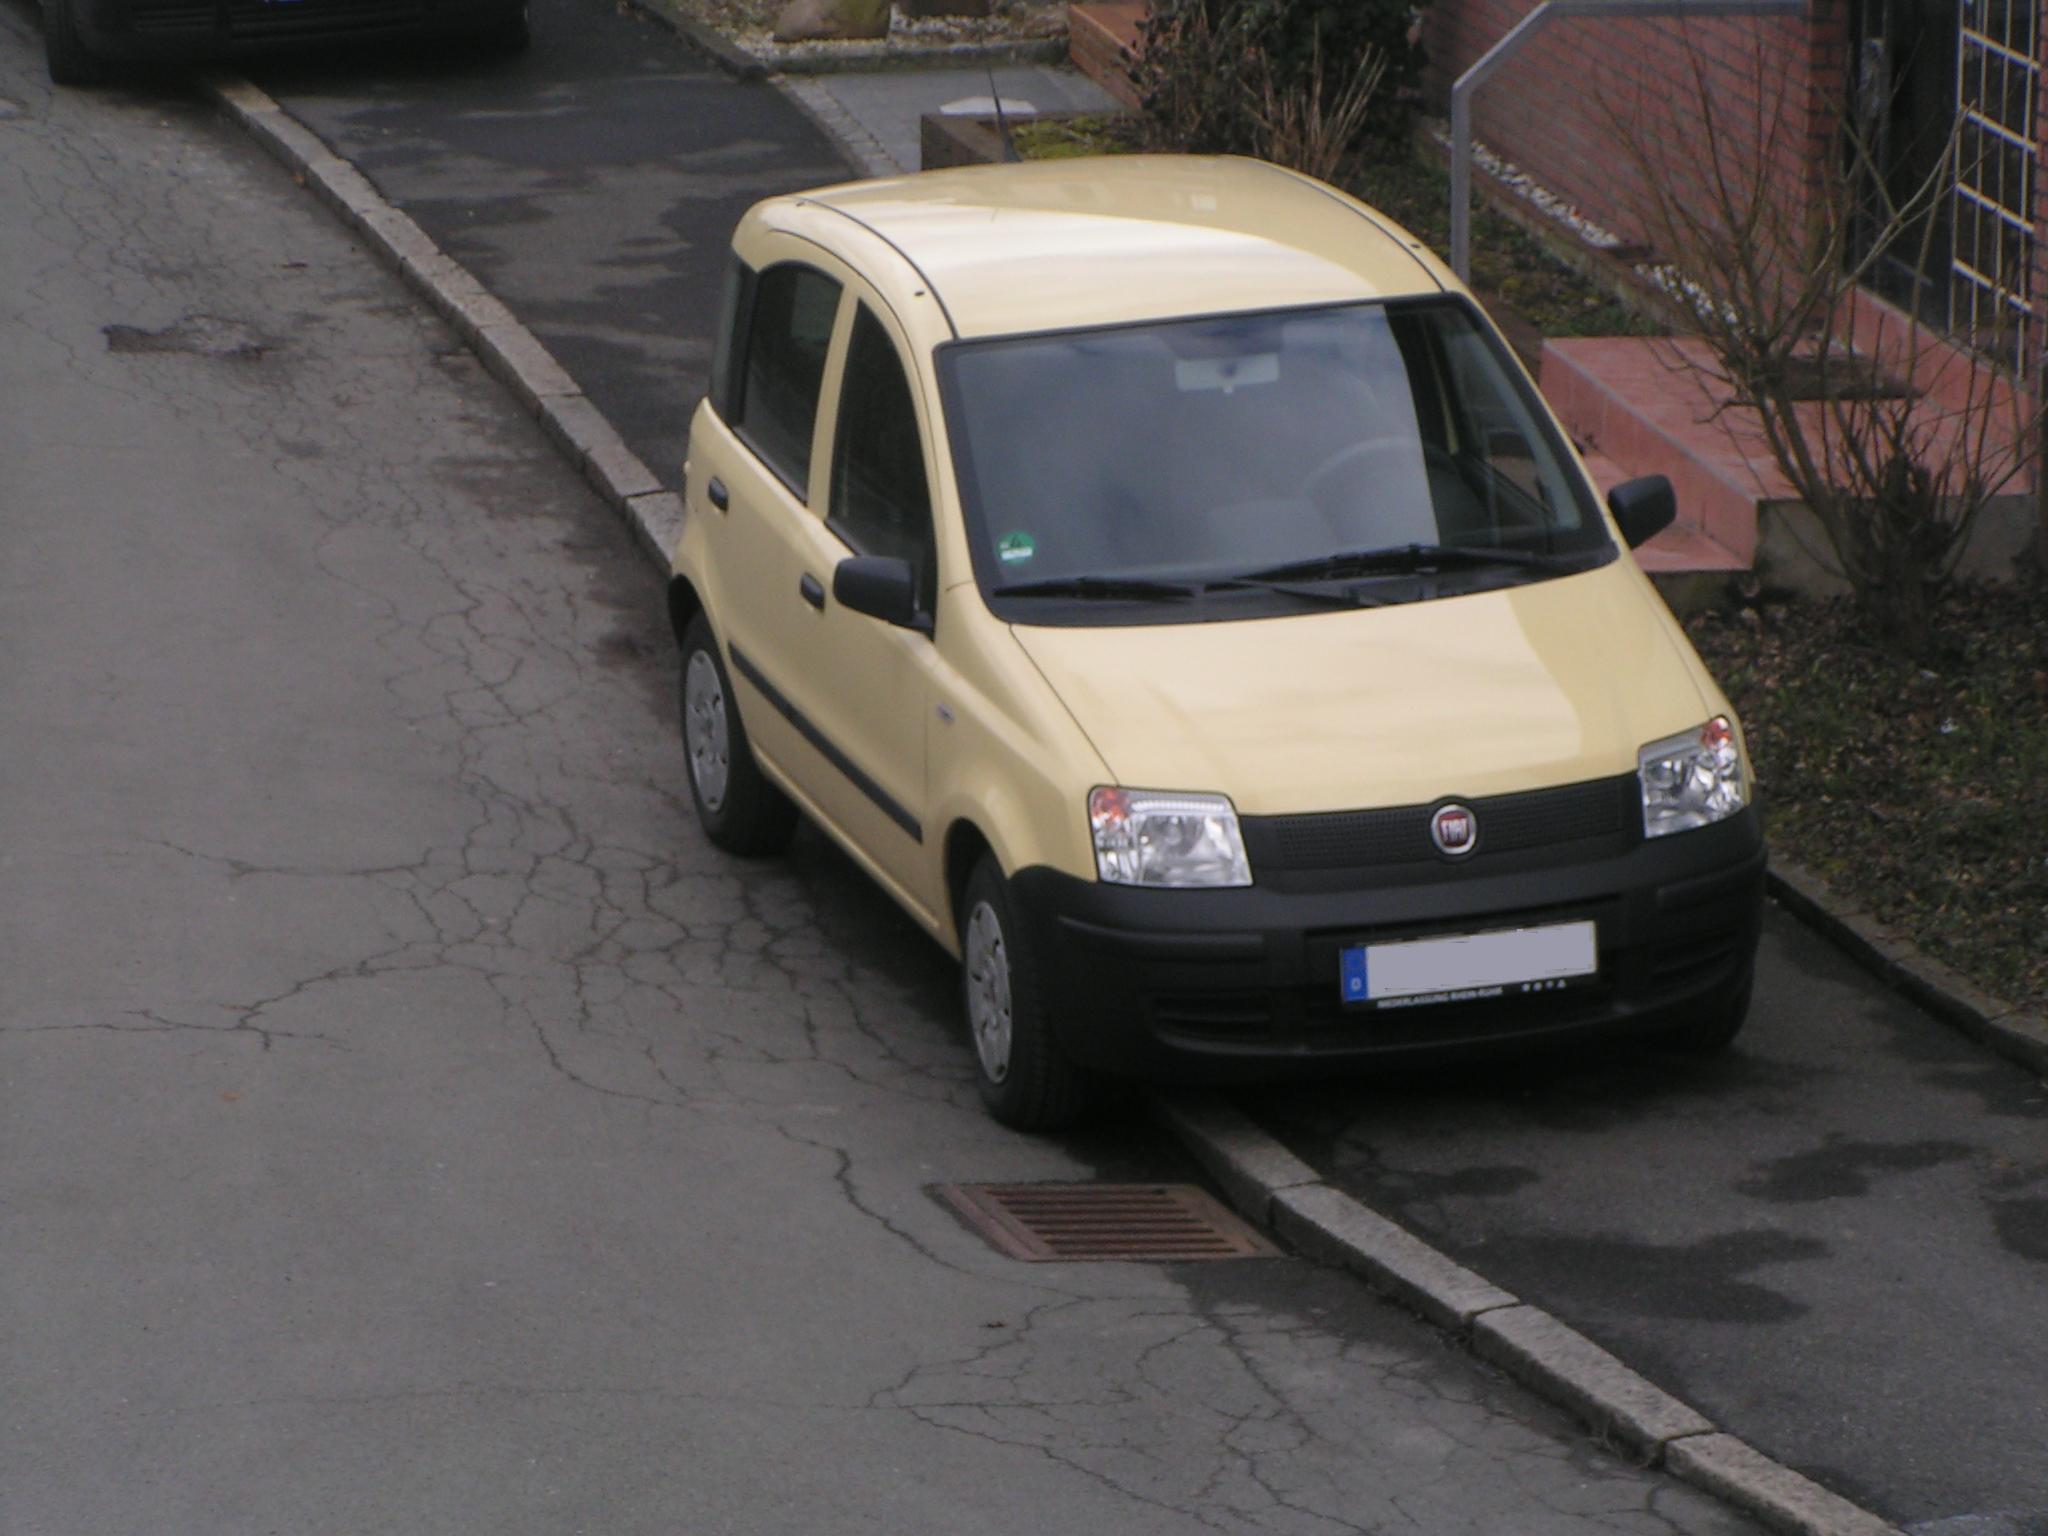 Junas yellow Fiat Panda